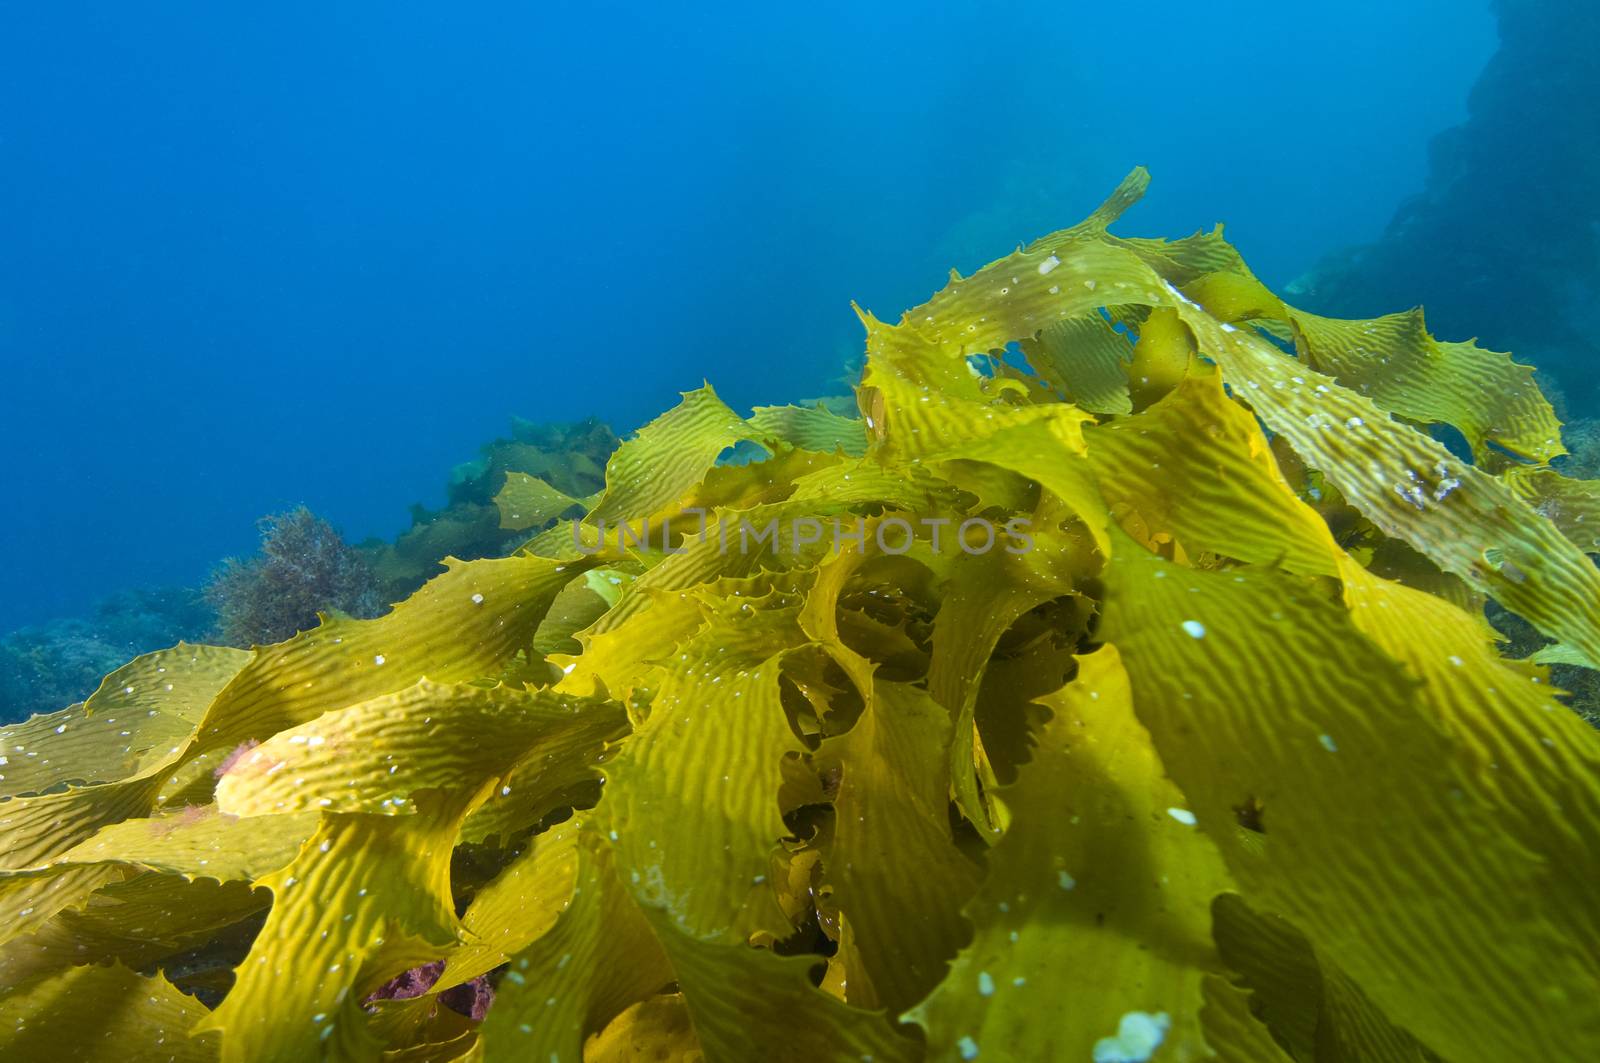 Kelp on ocean bottom off Catalina island, CA by Njean